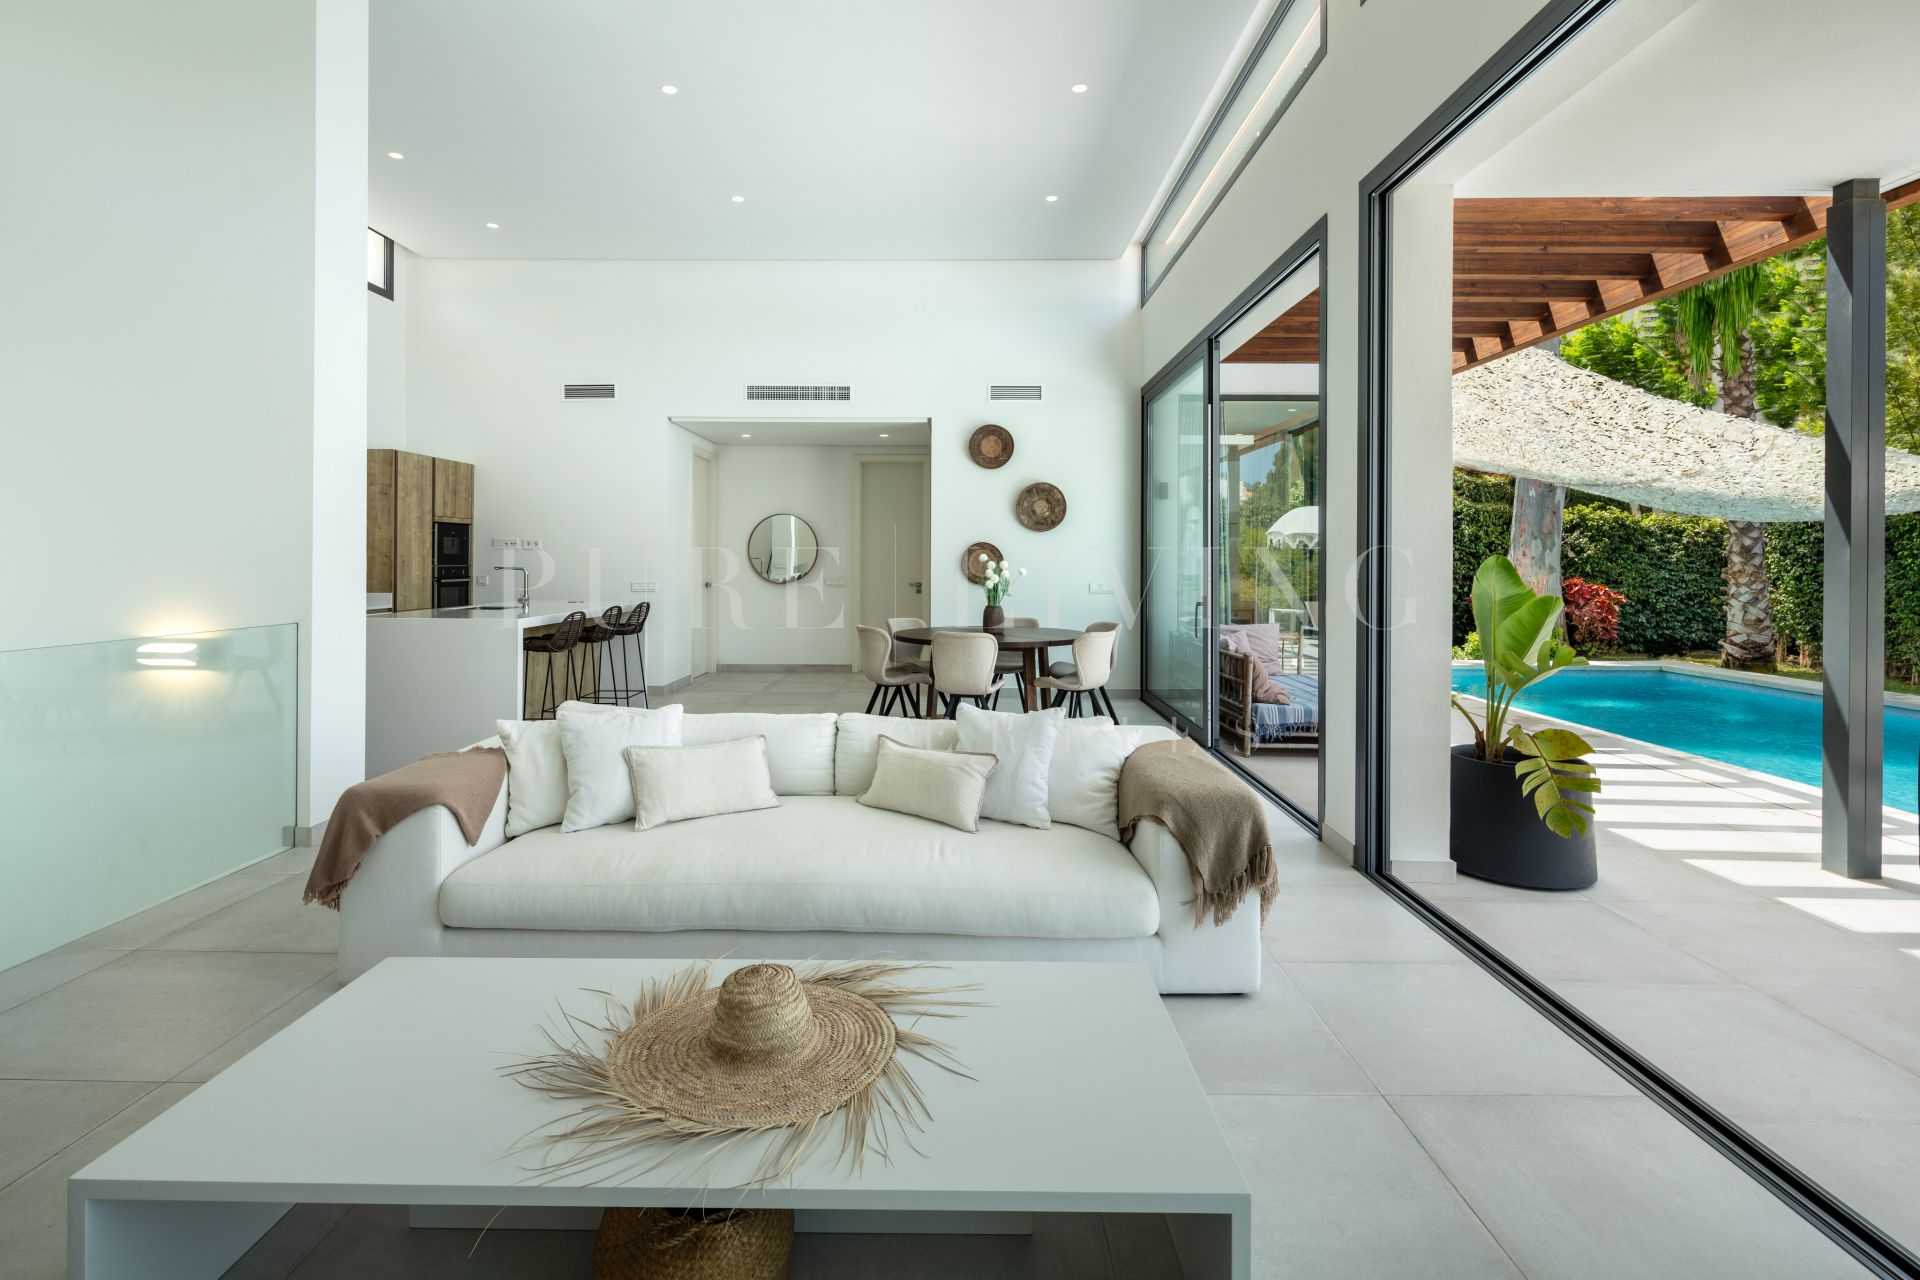 Luxury three bedroom villa in Arboleda